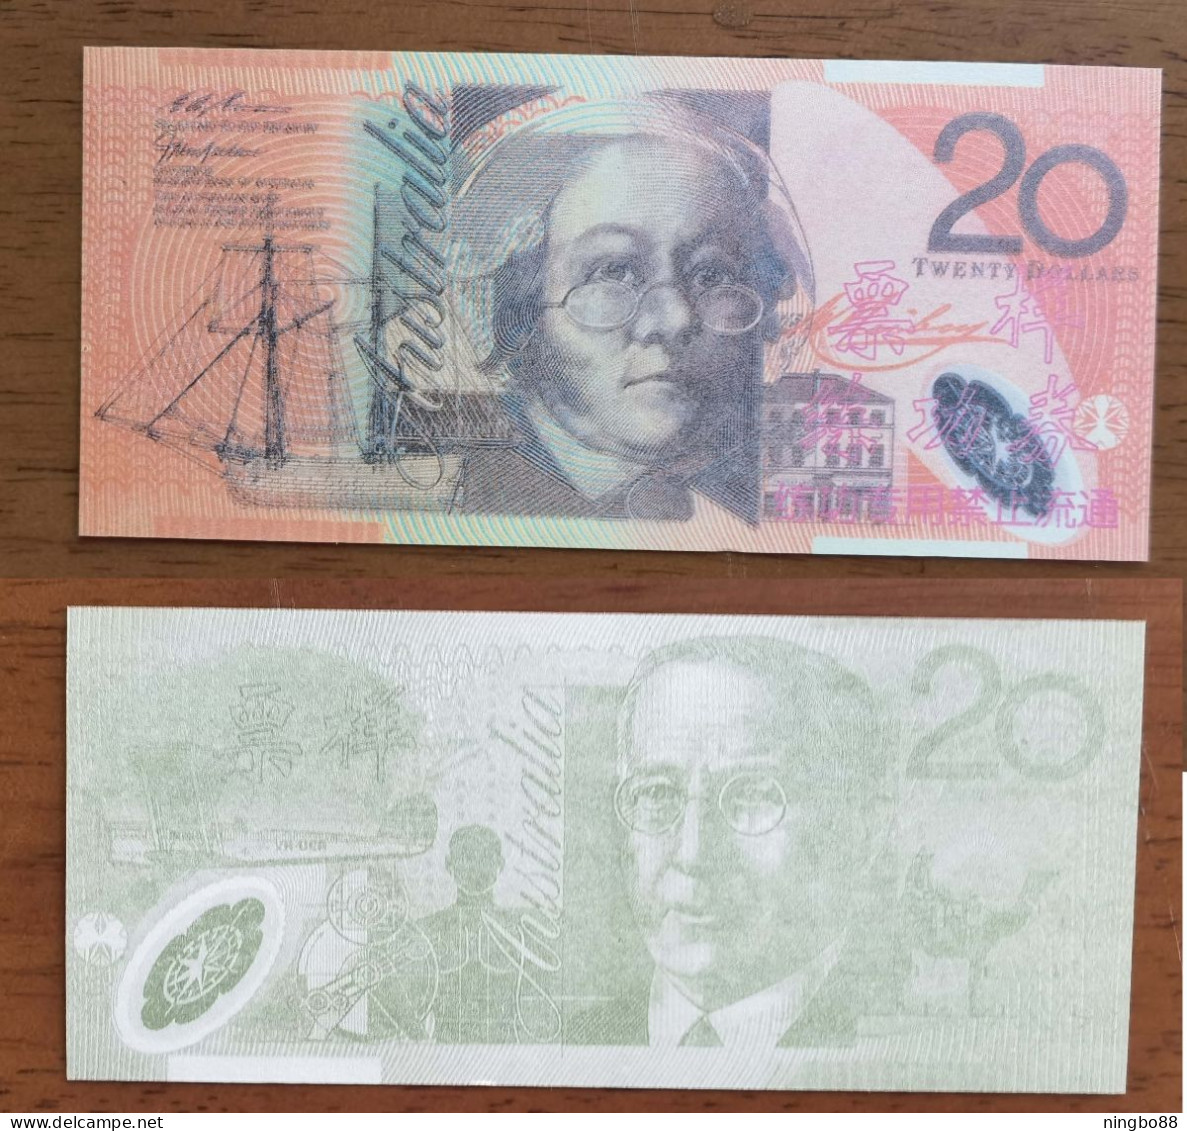 China BOC Bank (bank Of China) Training/test Banknote,AUSTRALIA B-2 Series 20 Dollars Note Specimen Overprint - Ficticios & Especimenes